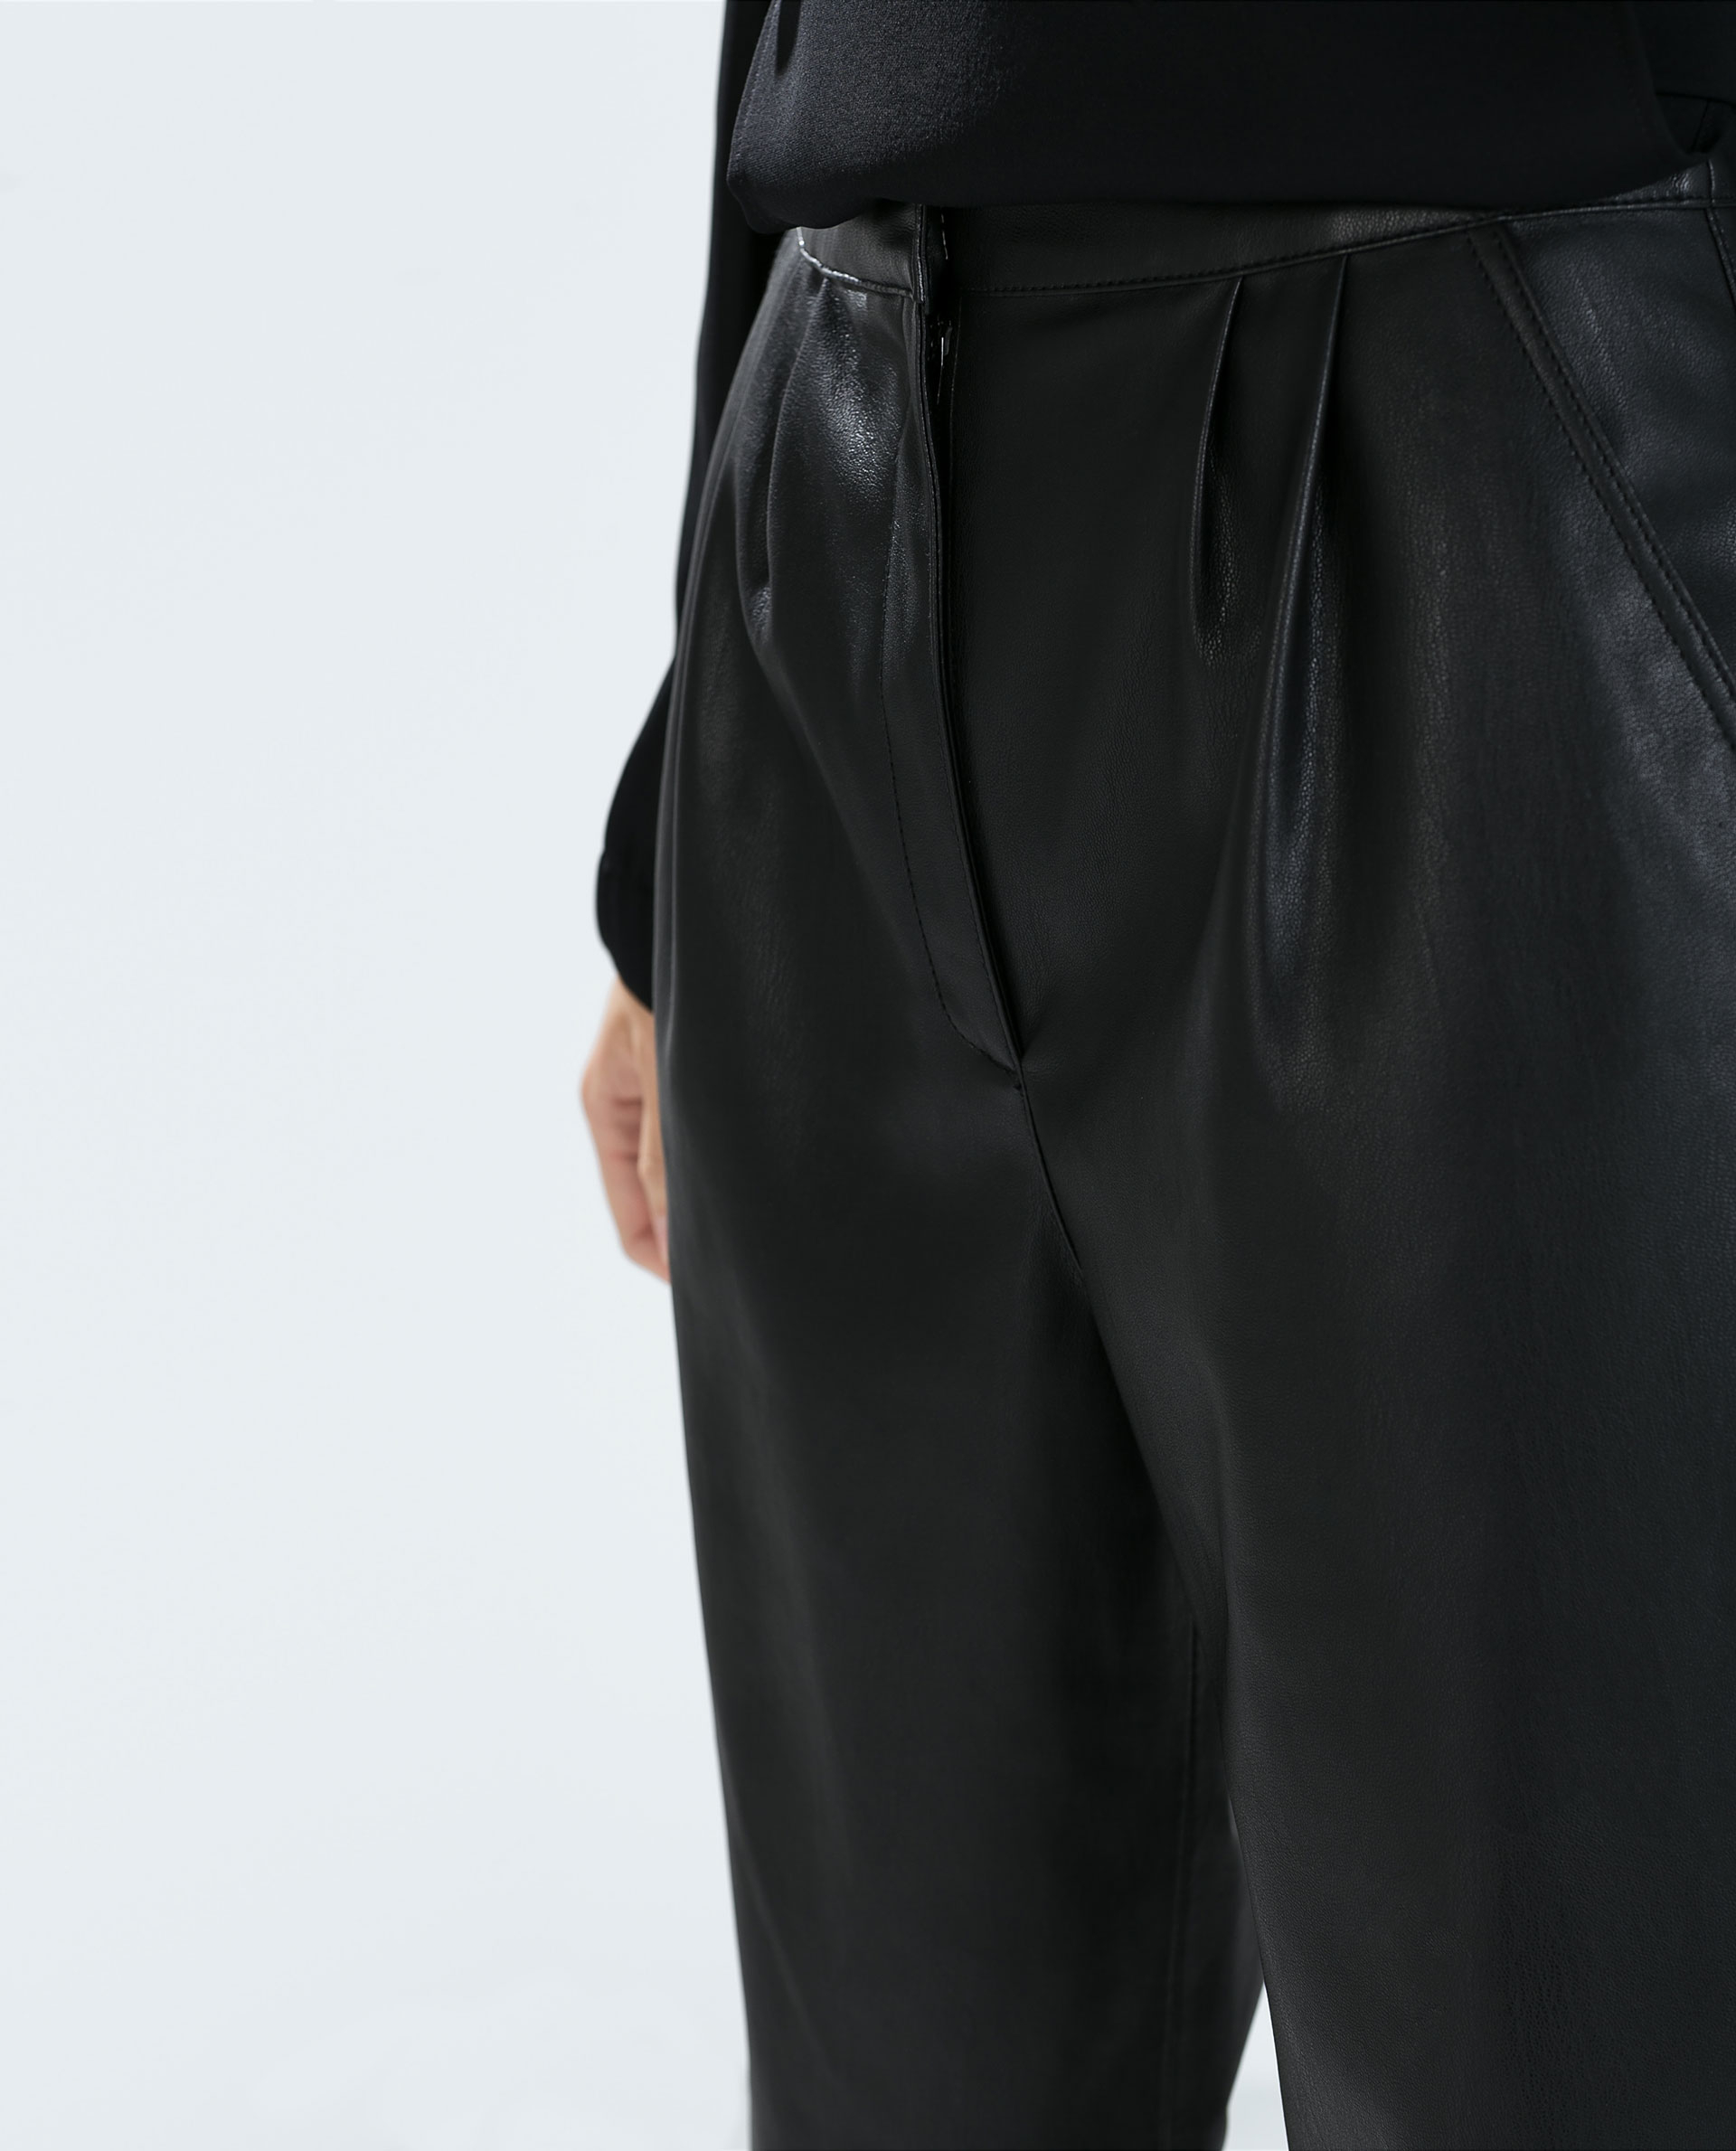 Zara High Waist Faux Leather Trousers in Black | Lyst